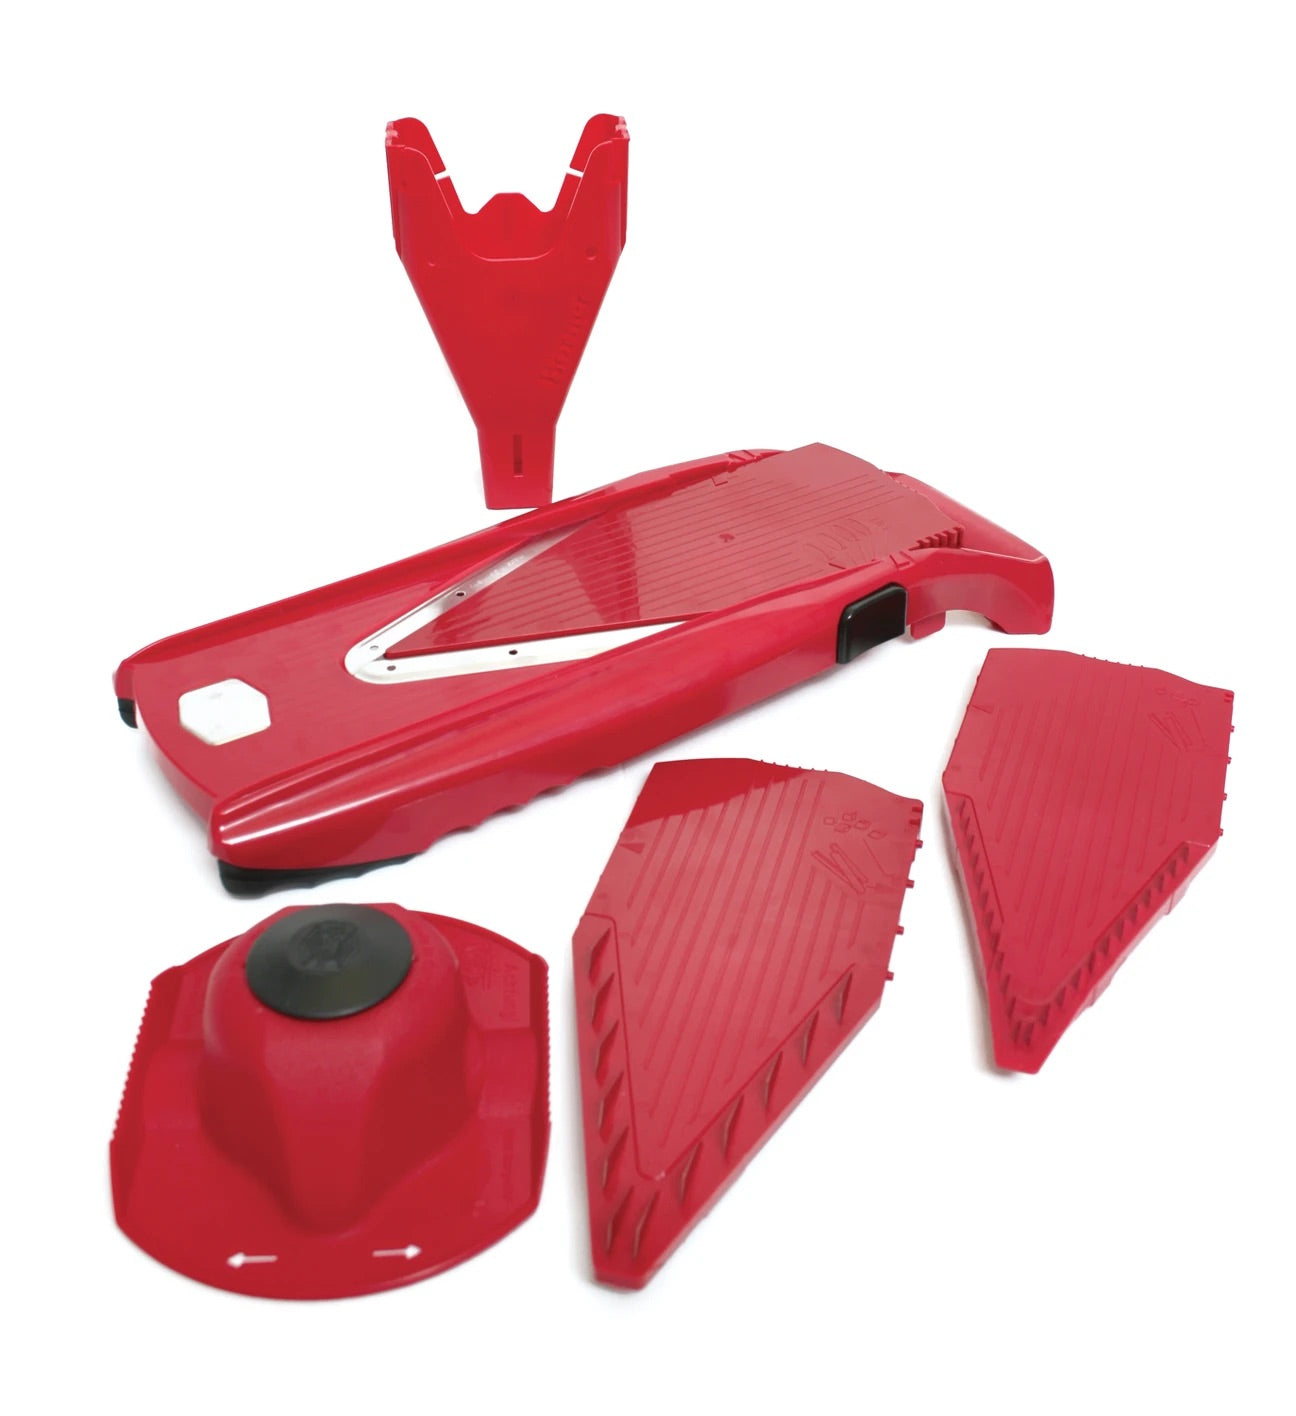 Borner V-Power Mandoline Slicer, Red – Kitchen Boutique Canada